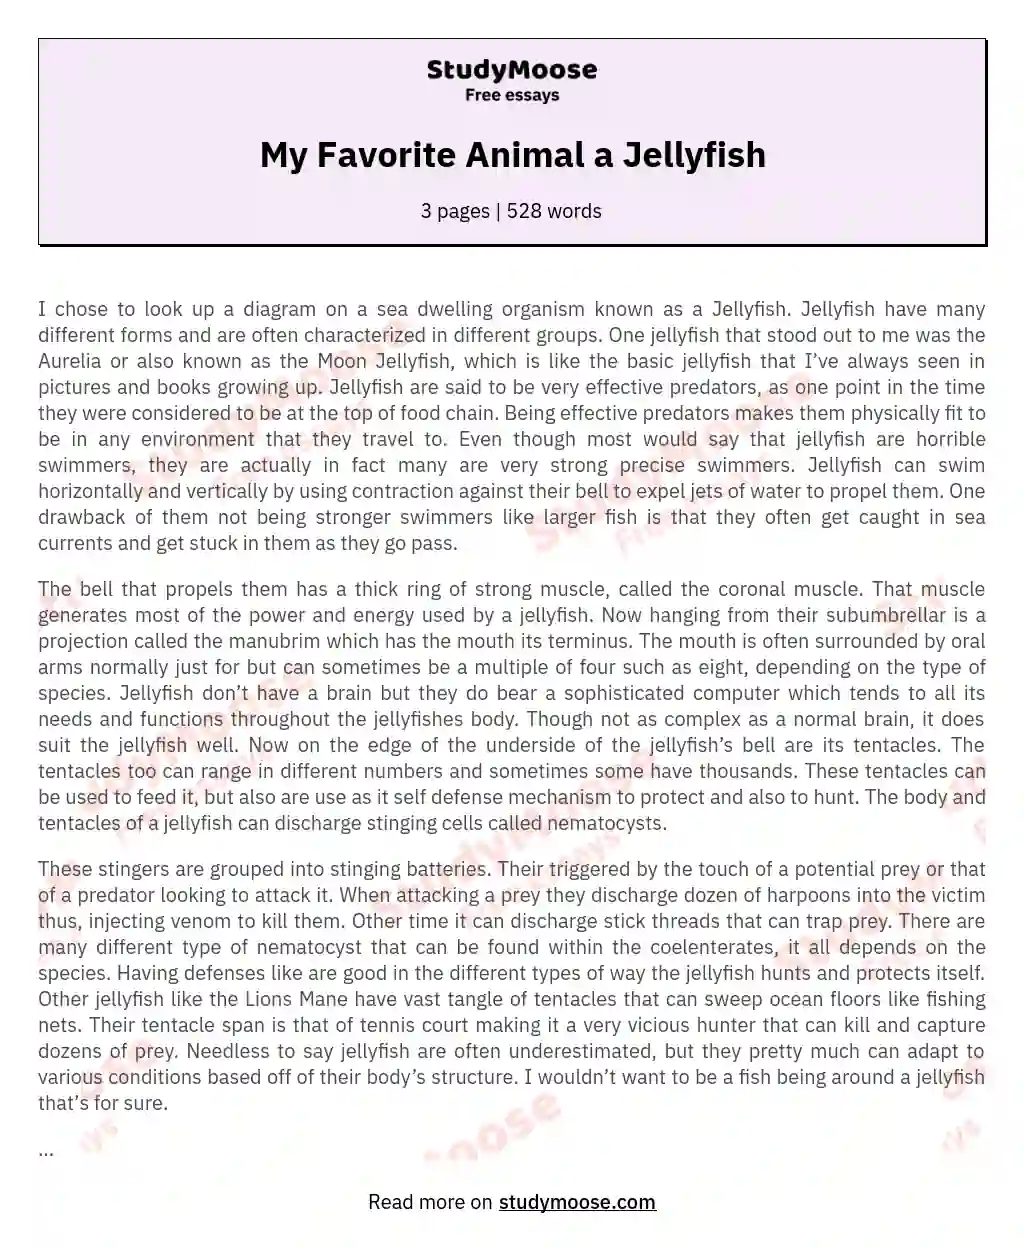 My Favorite Animal a Jellyfish Free Essay Example